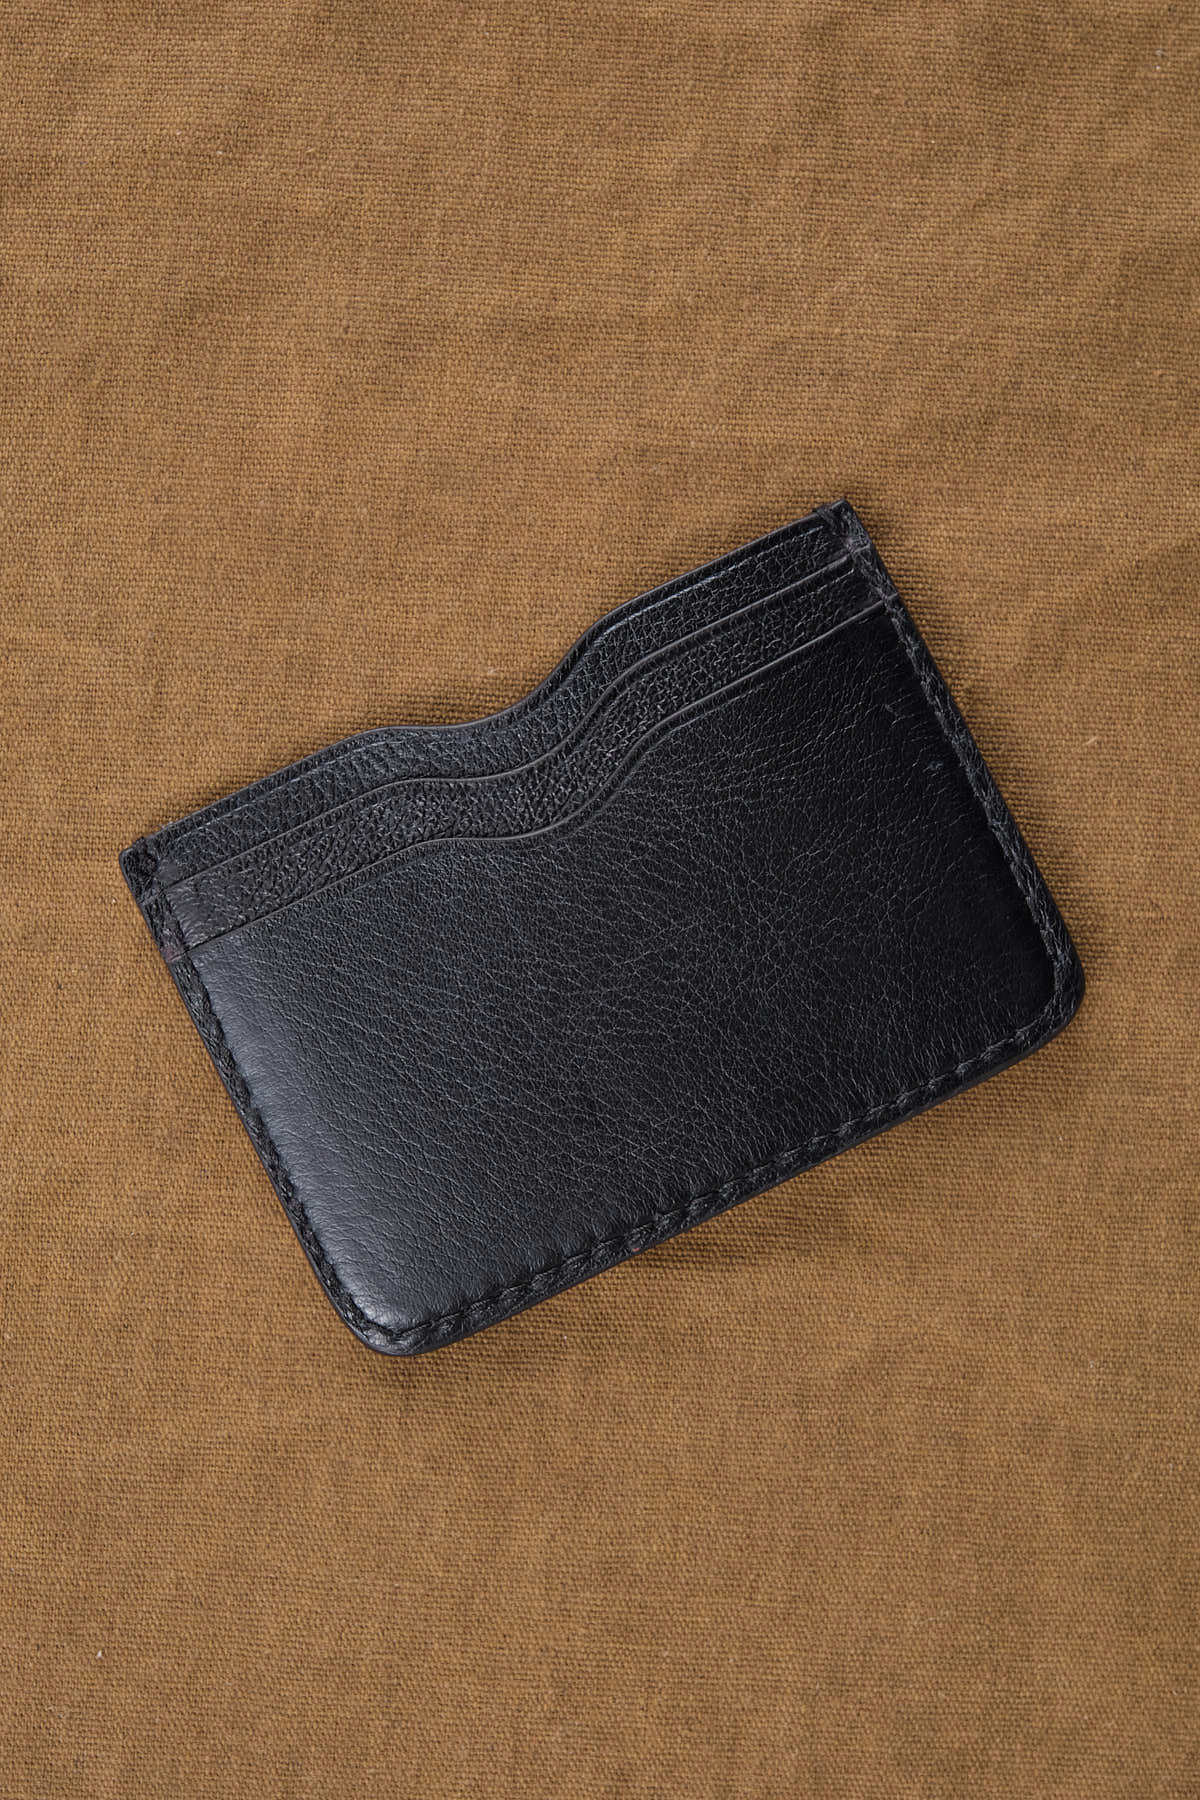 Back view of Akira Wallet in Black